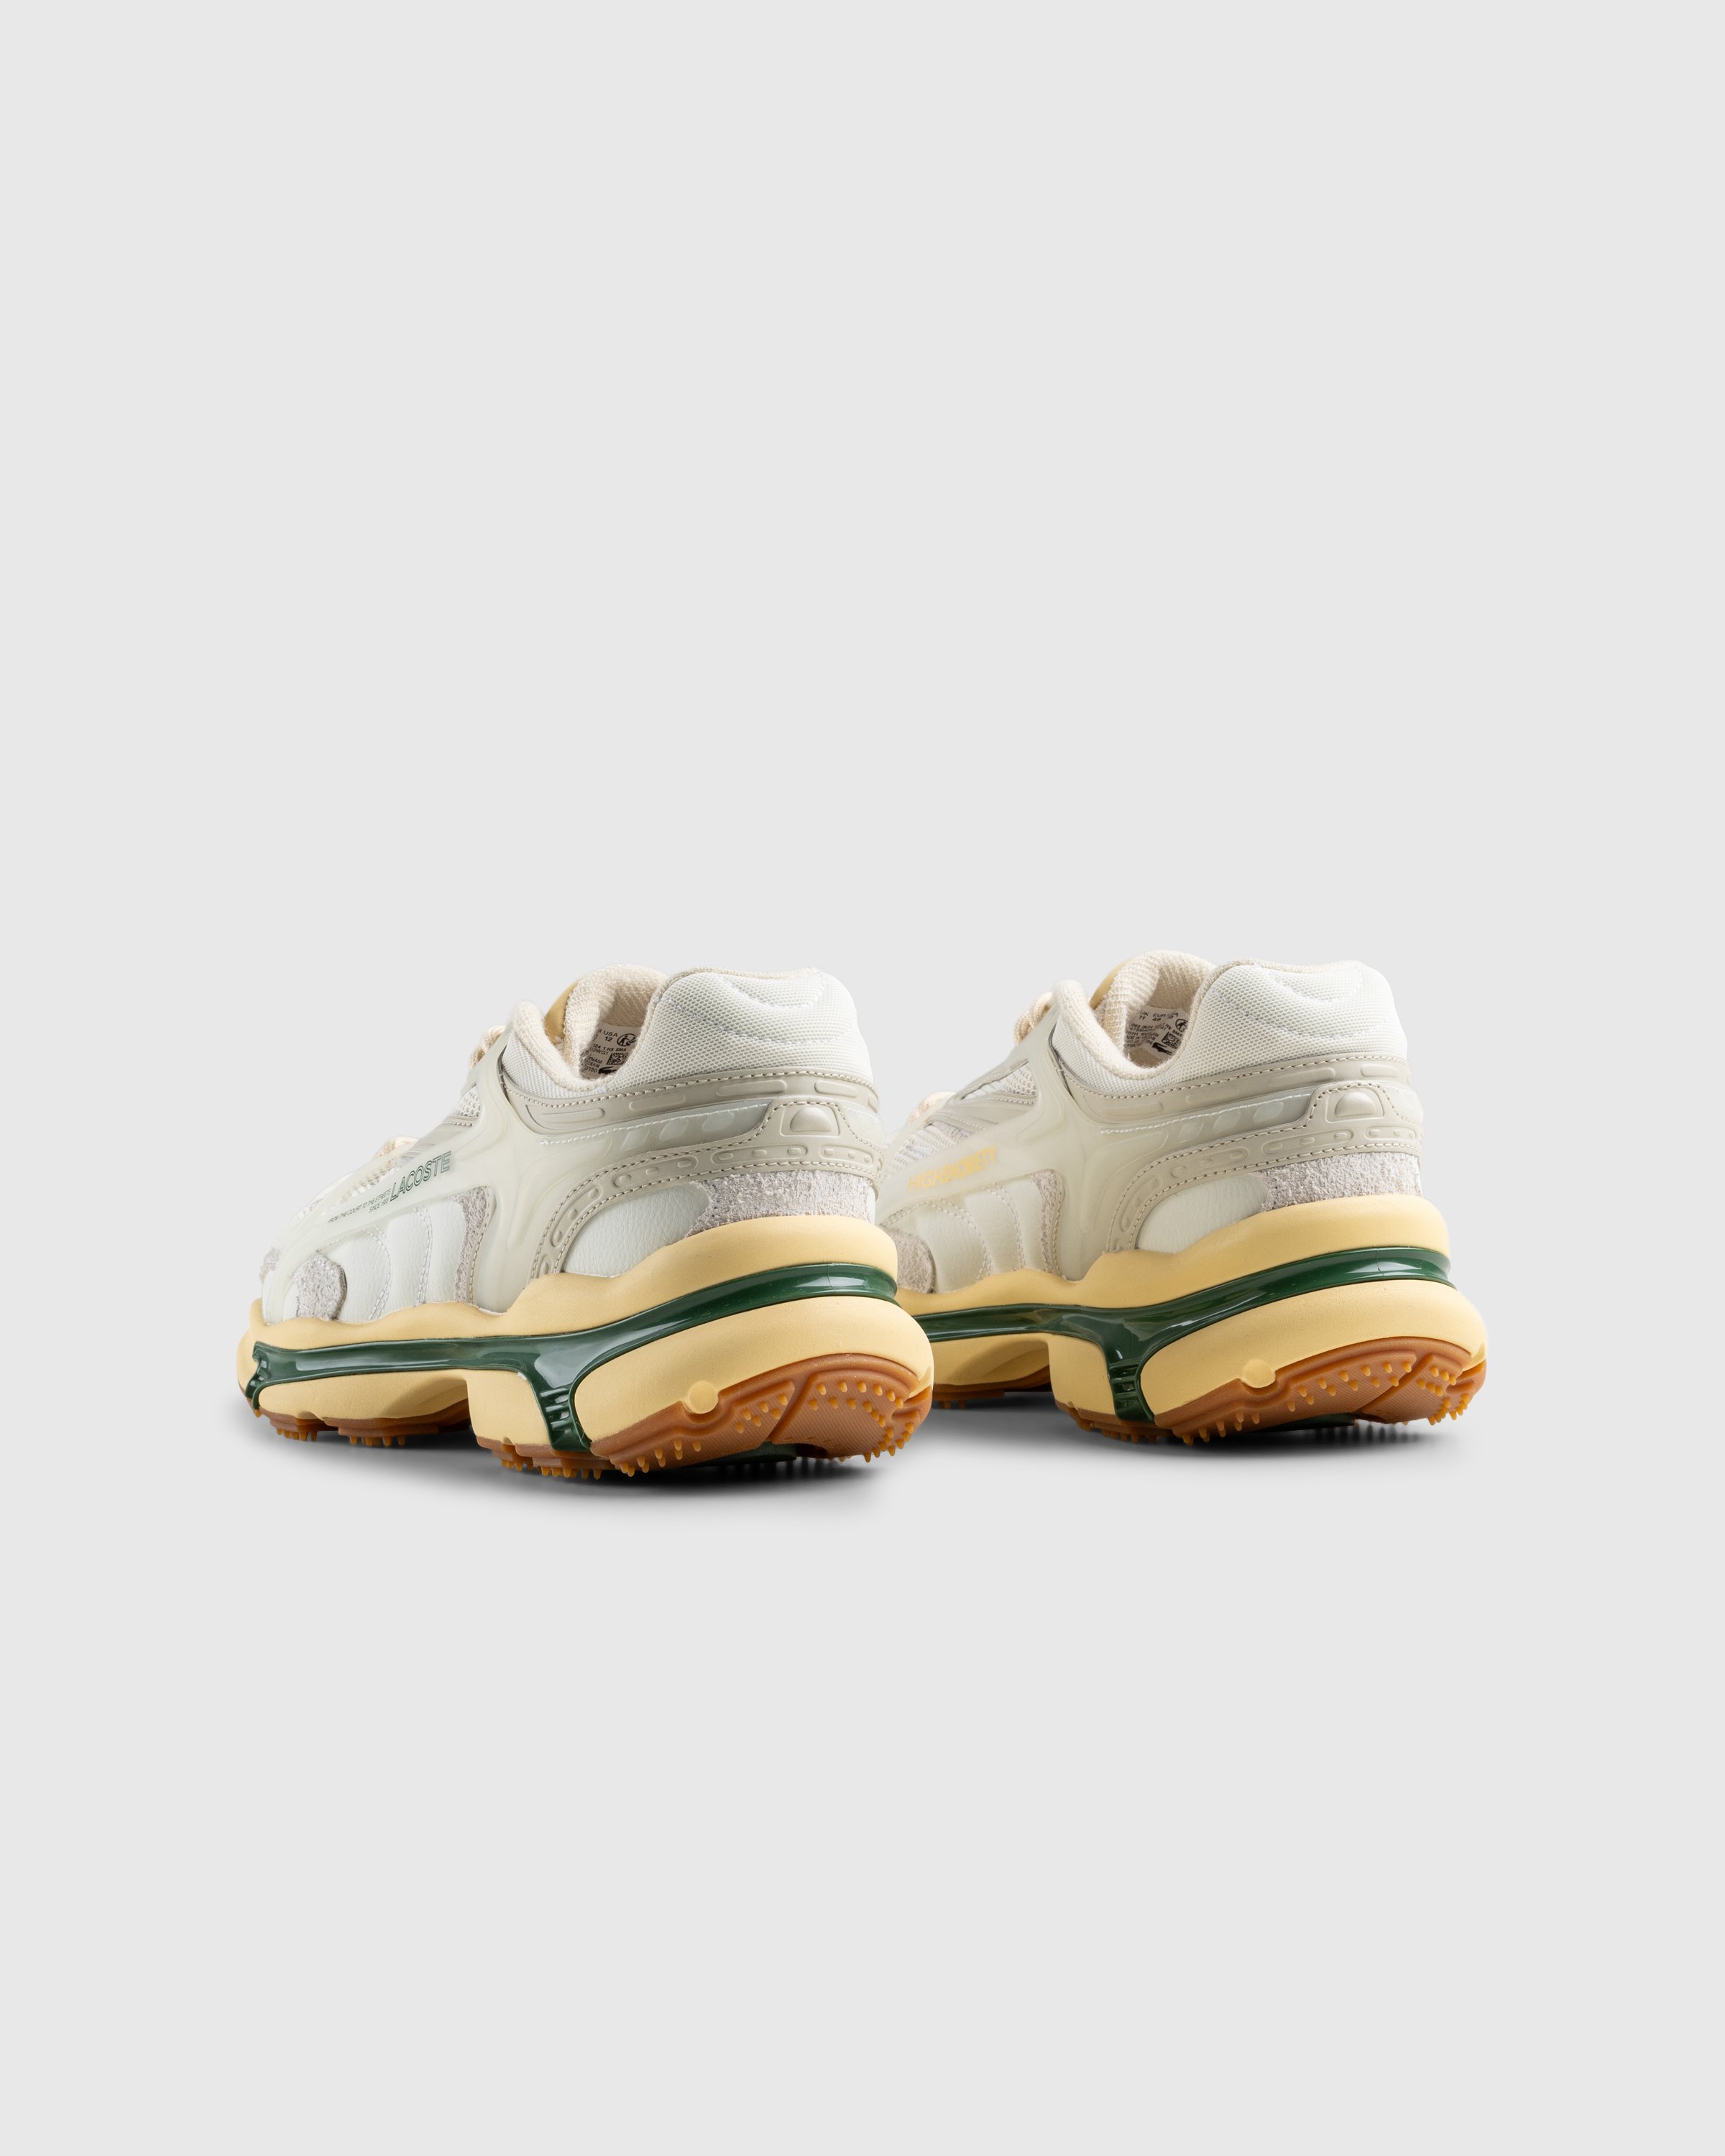 Lacoste x Highsnobiety - FTW - Footwear - White/Eggshell/Green - Image 4